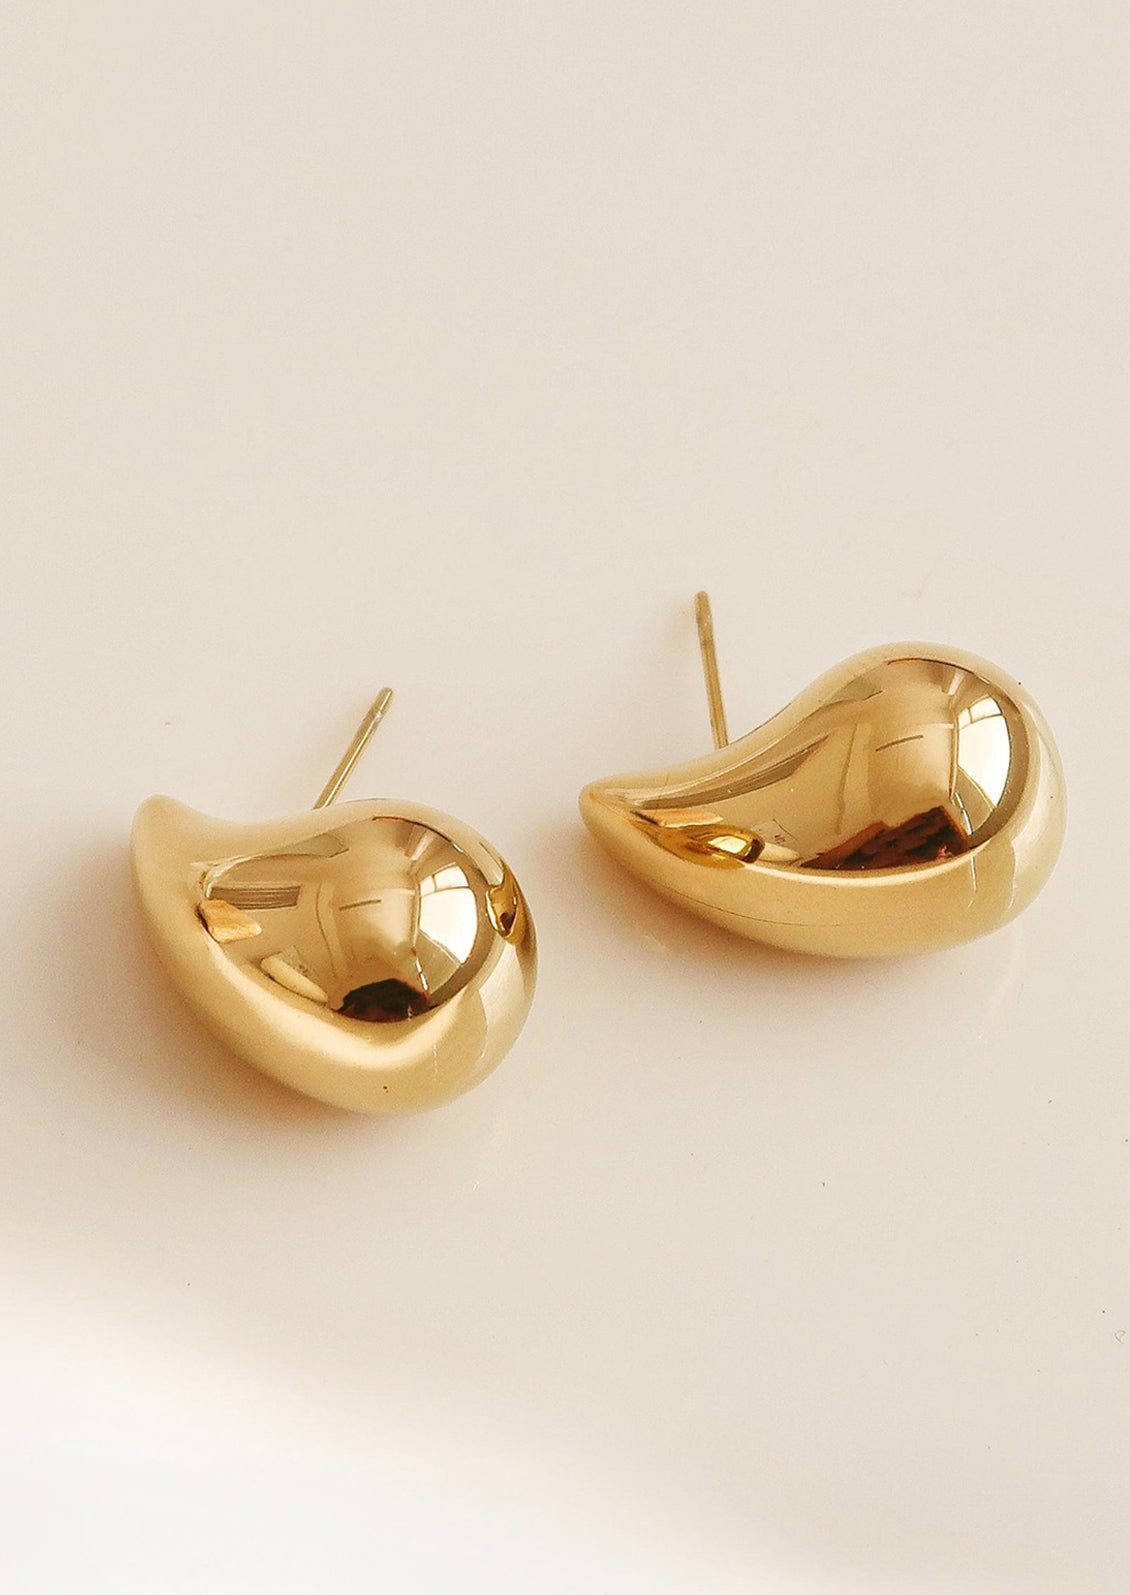 A pair of chunky, teardrop-shaped earrings in gold.